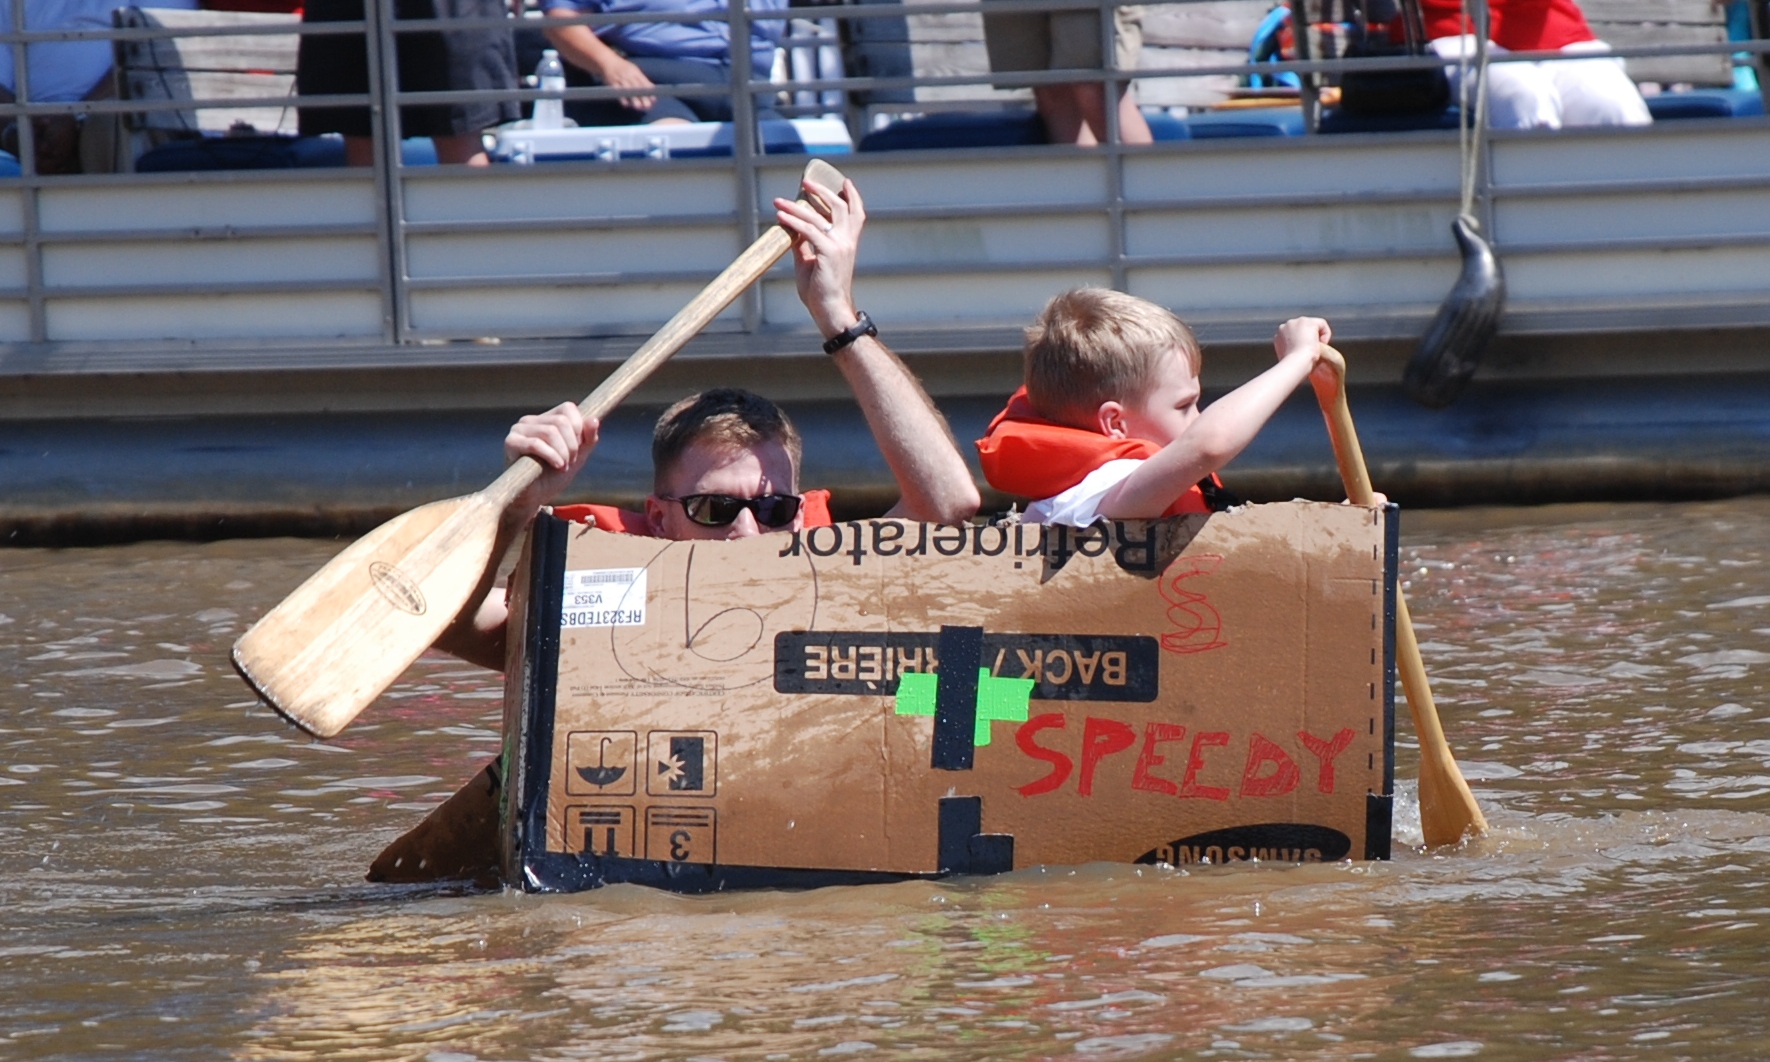 DIY cardboard boat